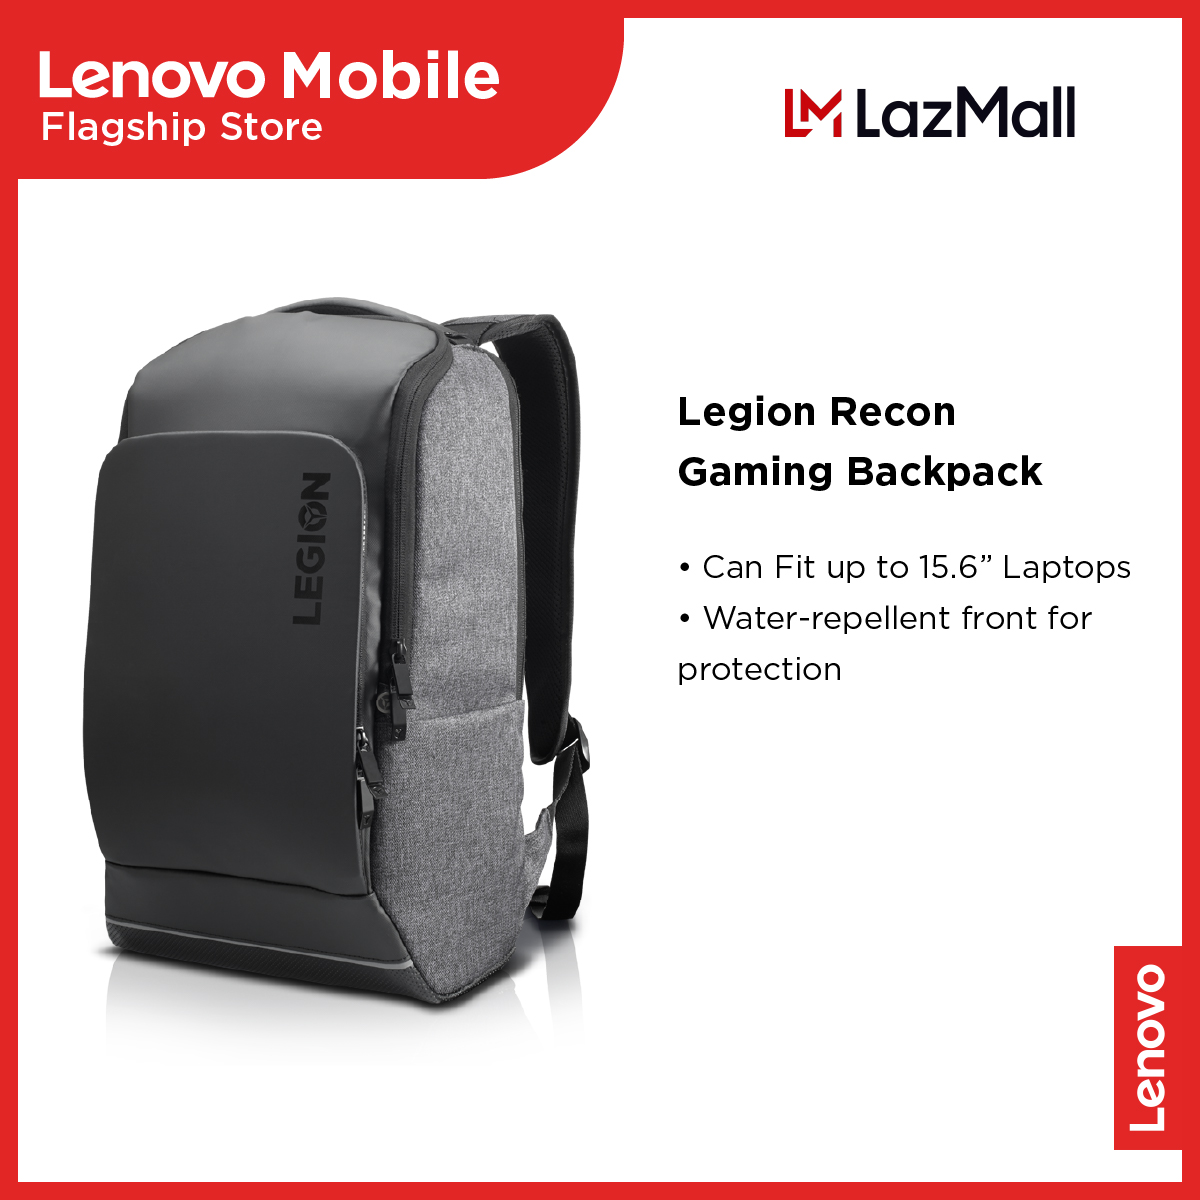 lenovo legion recon gaming backpack